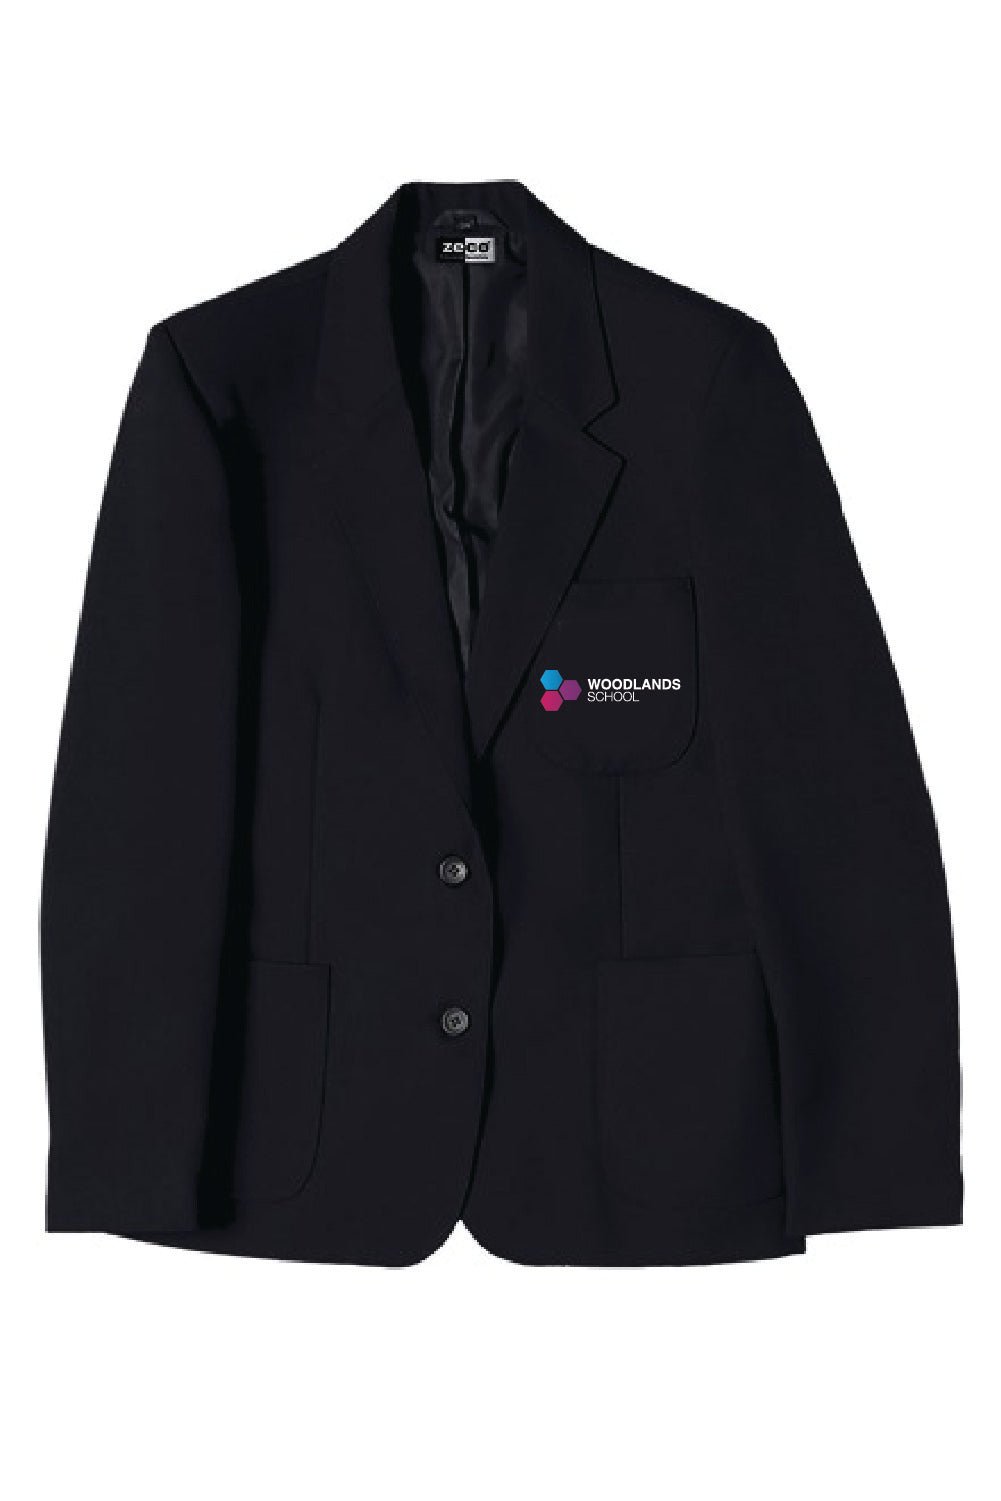 Woodlands Boys School Blazer - Uniformwise Schoolwear